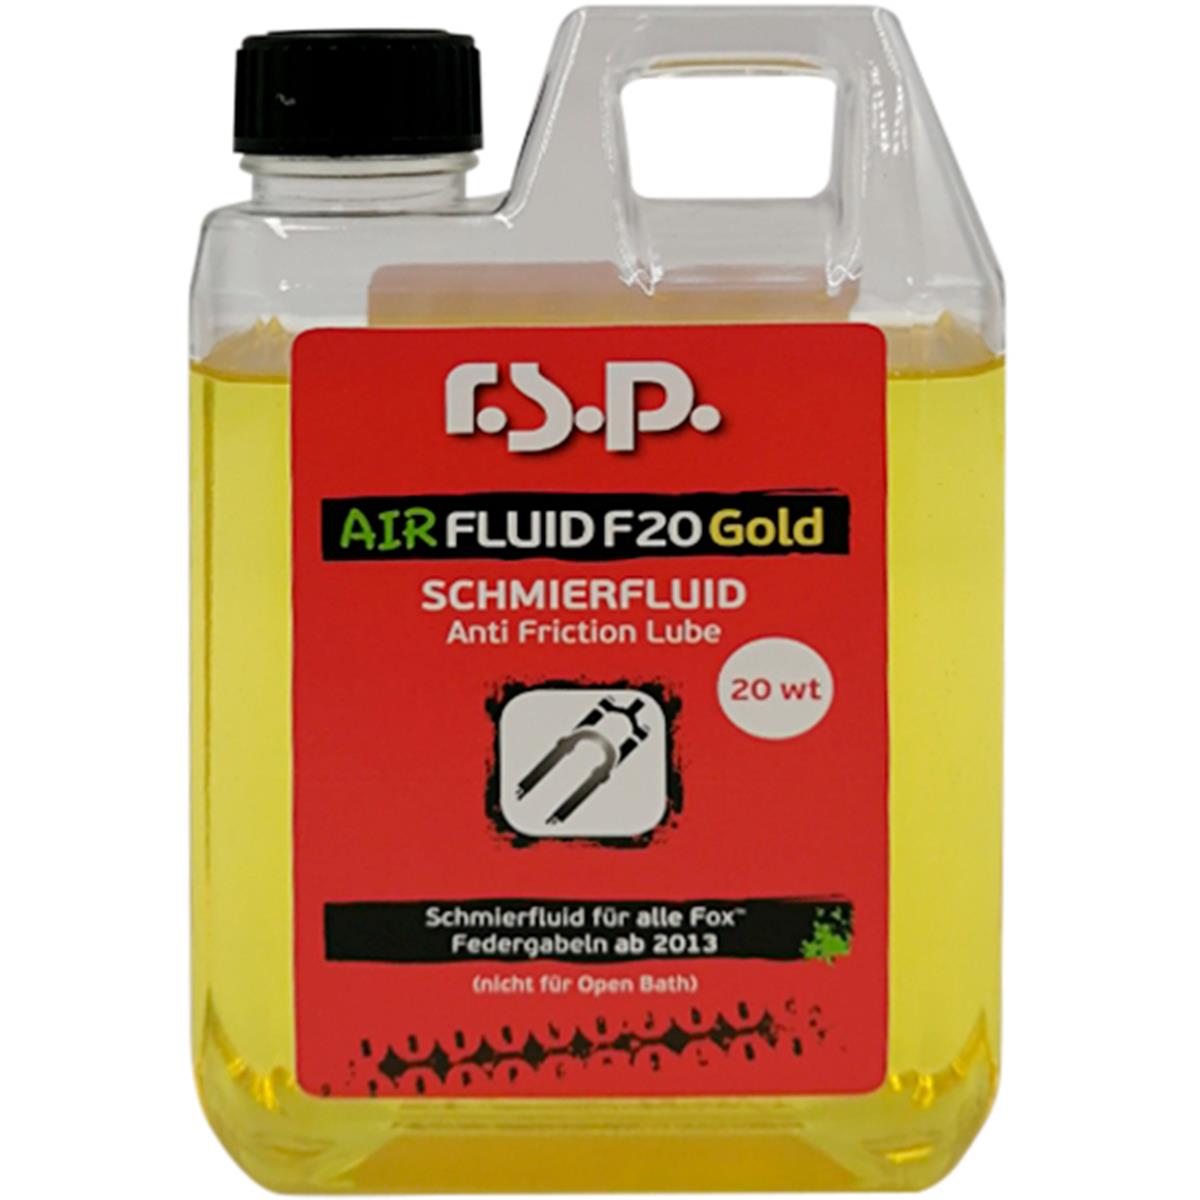 r.s.p. Suspension Öl Air Fluid F20 Gold 20 WT, 250 ml